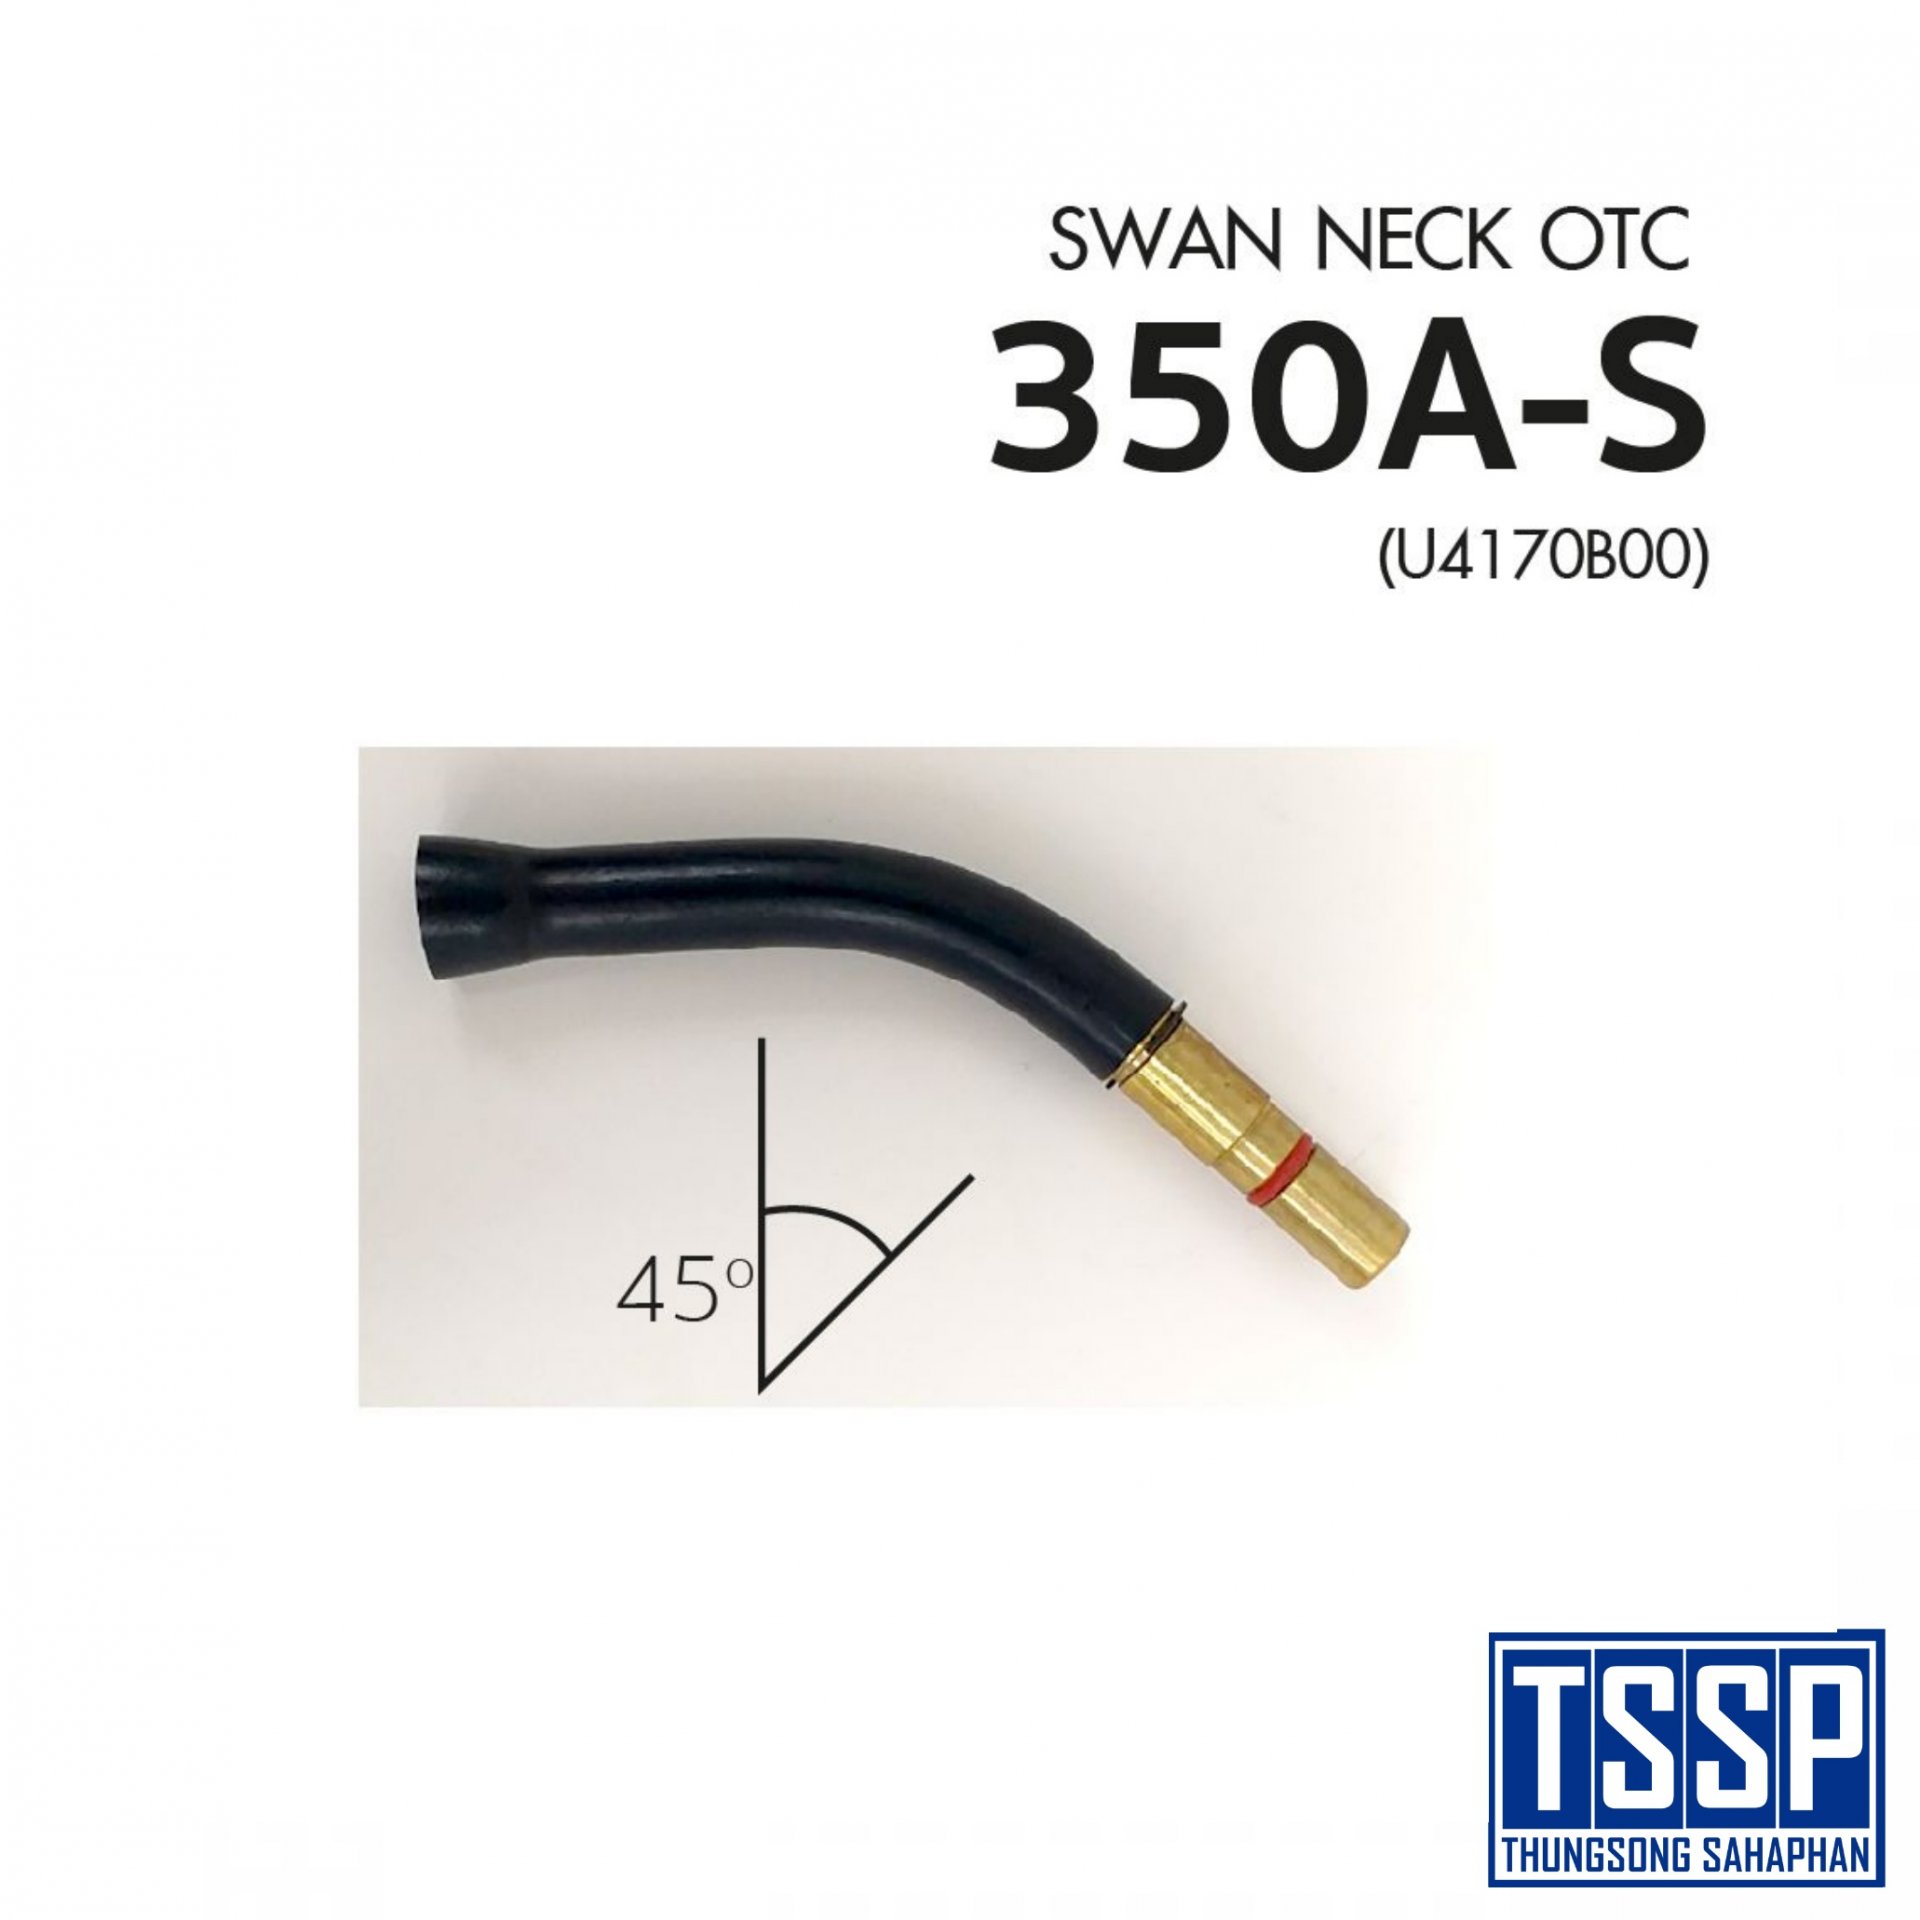 Swan neck OTC 350A-S